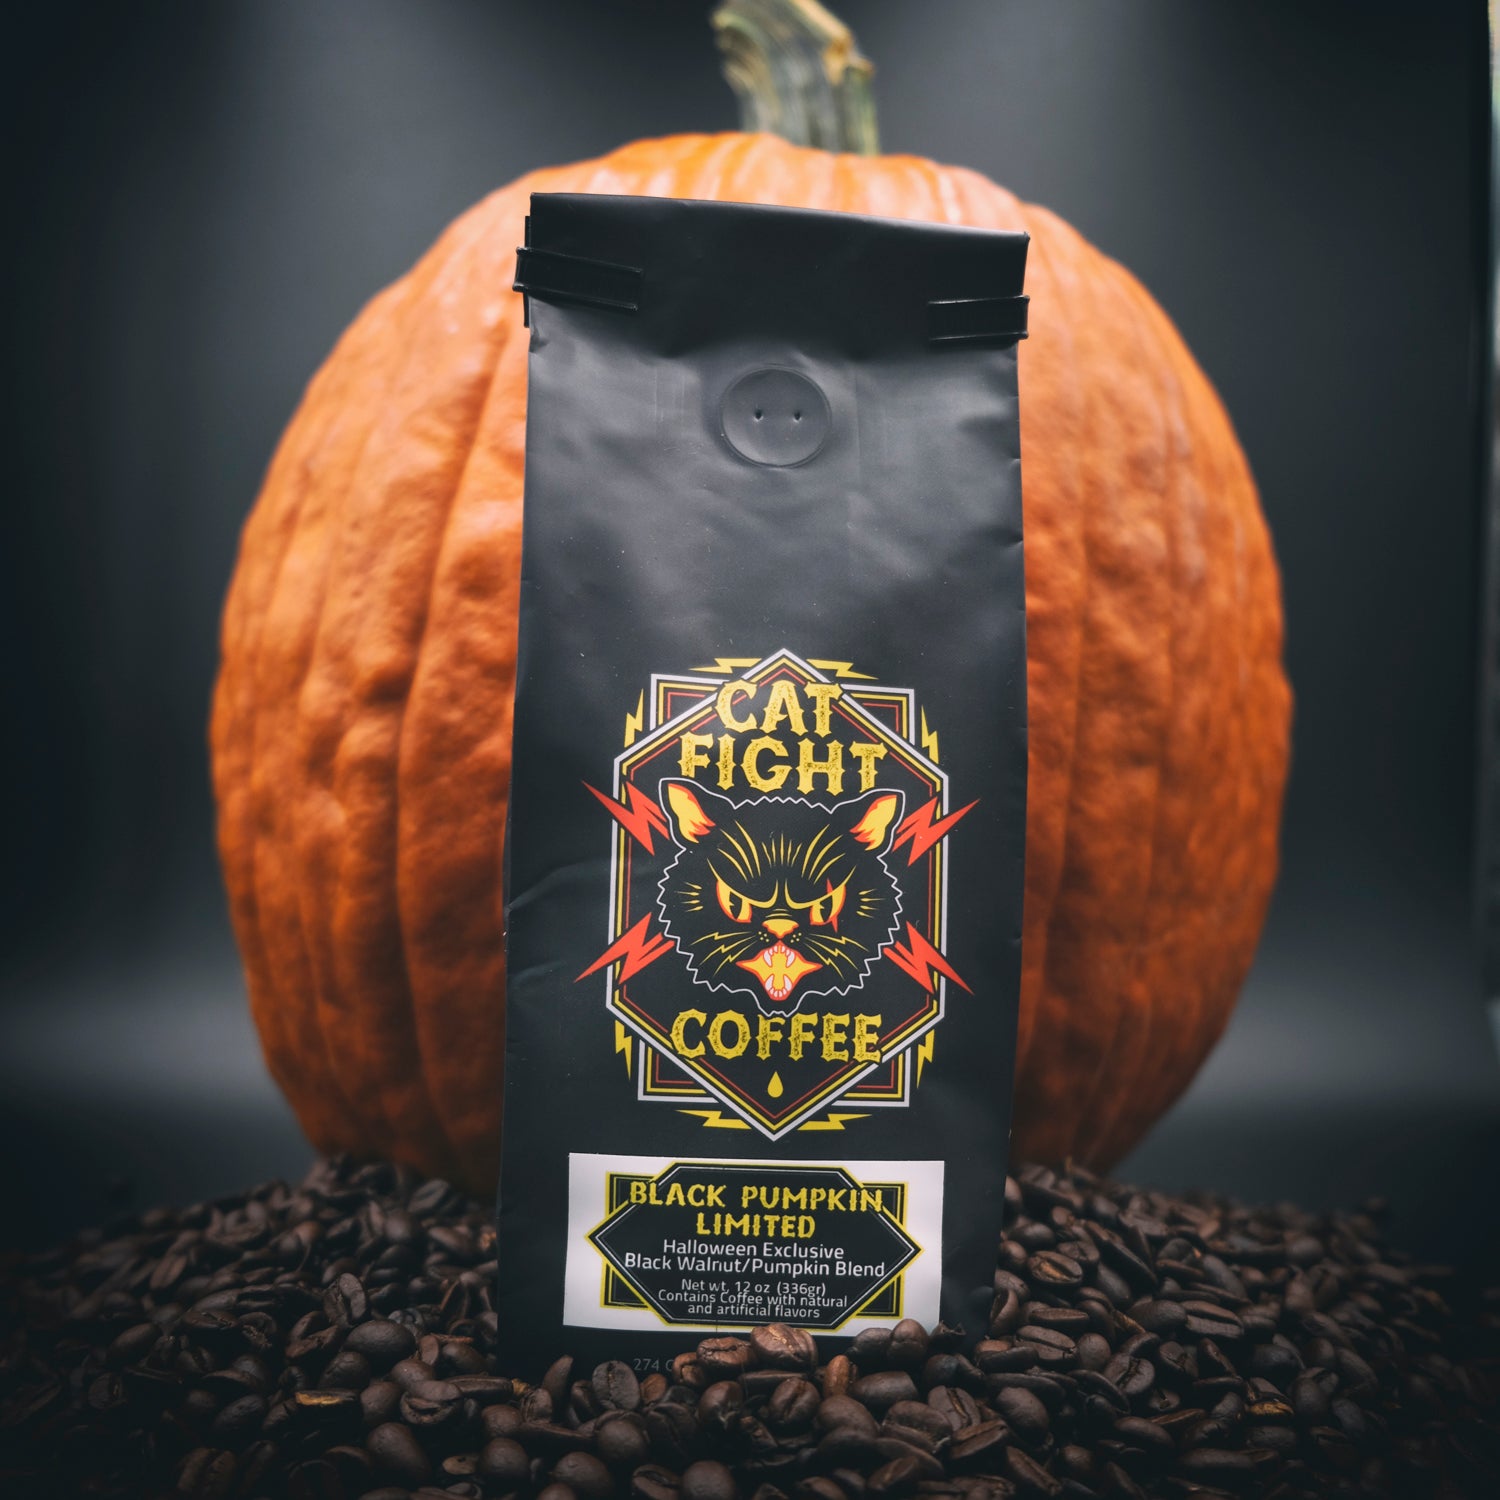 Black Rock Coffee Bar introduces a pumpkin-heavy fall menu of drinks